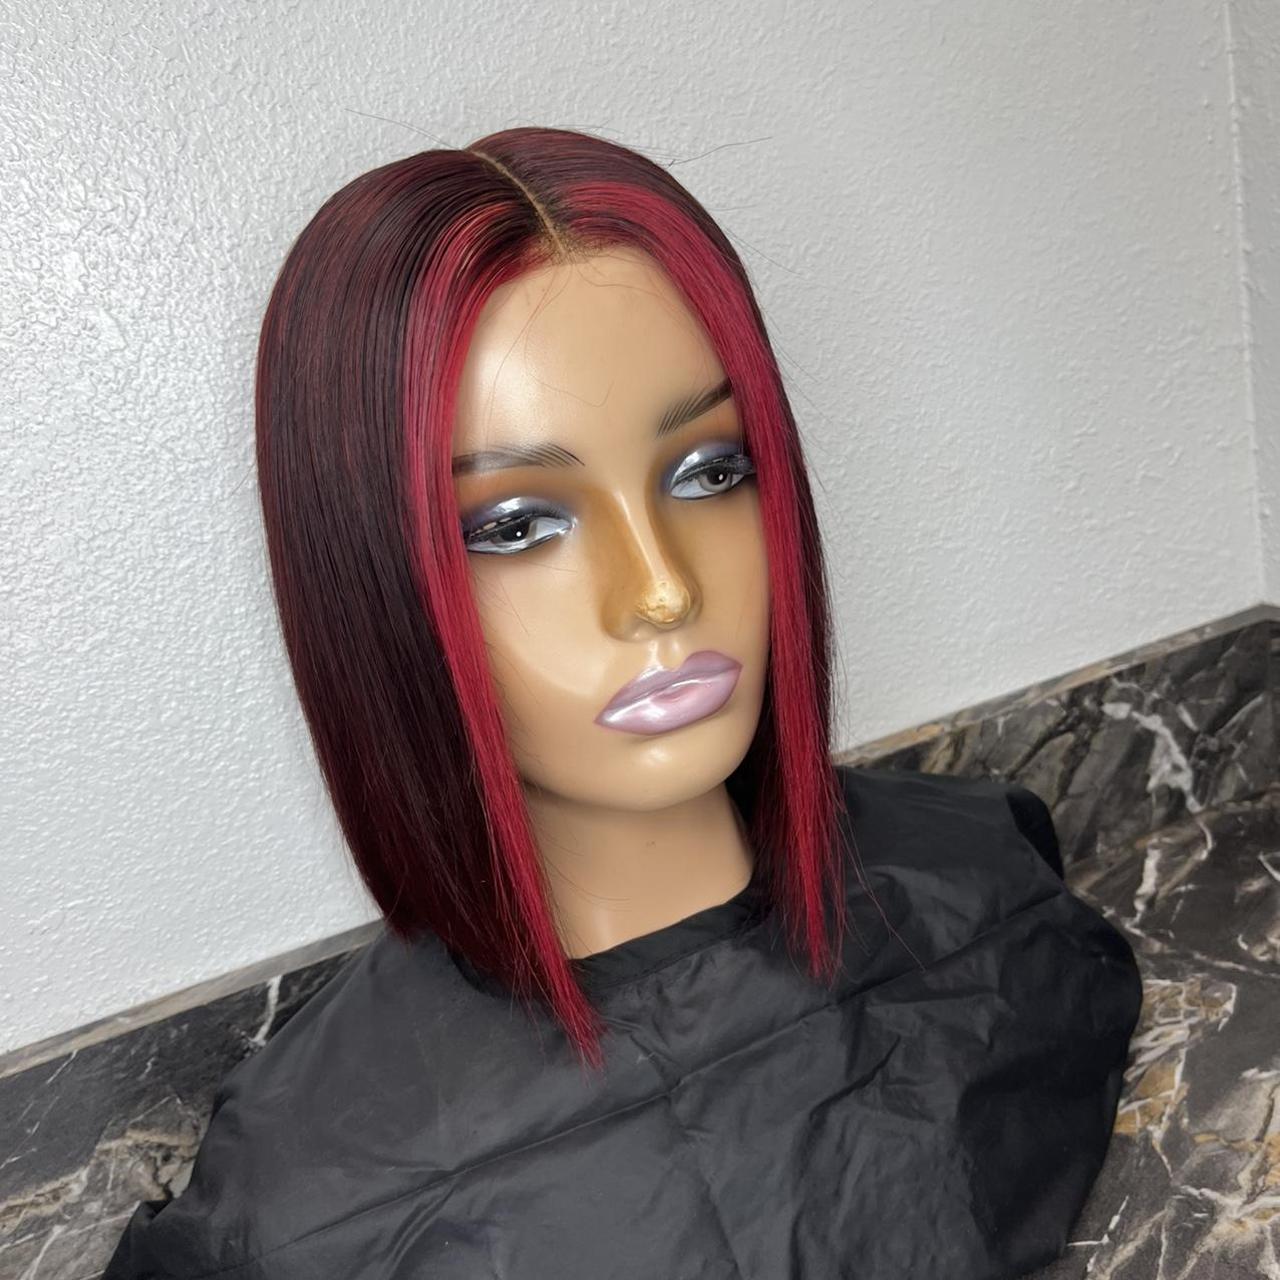 Product Image 2 - Custom wig glueless 
2x6 closure